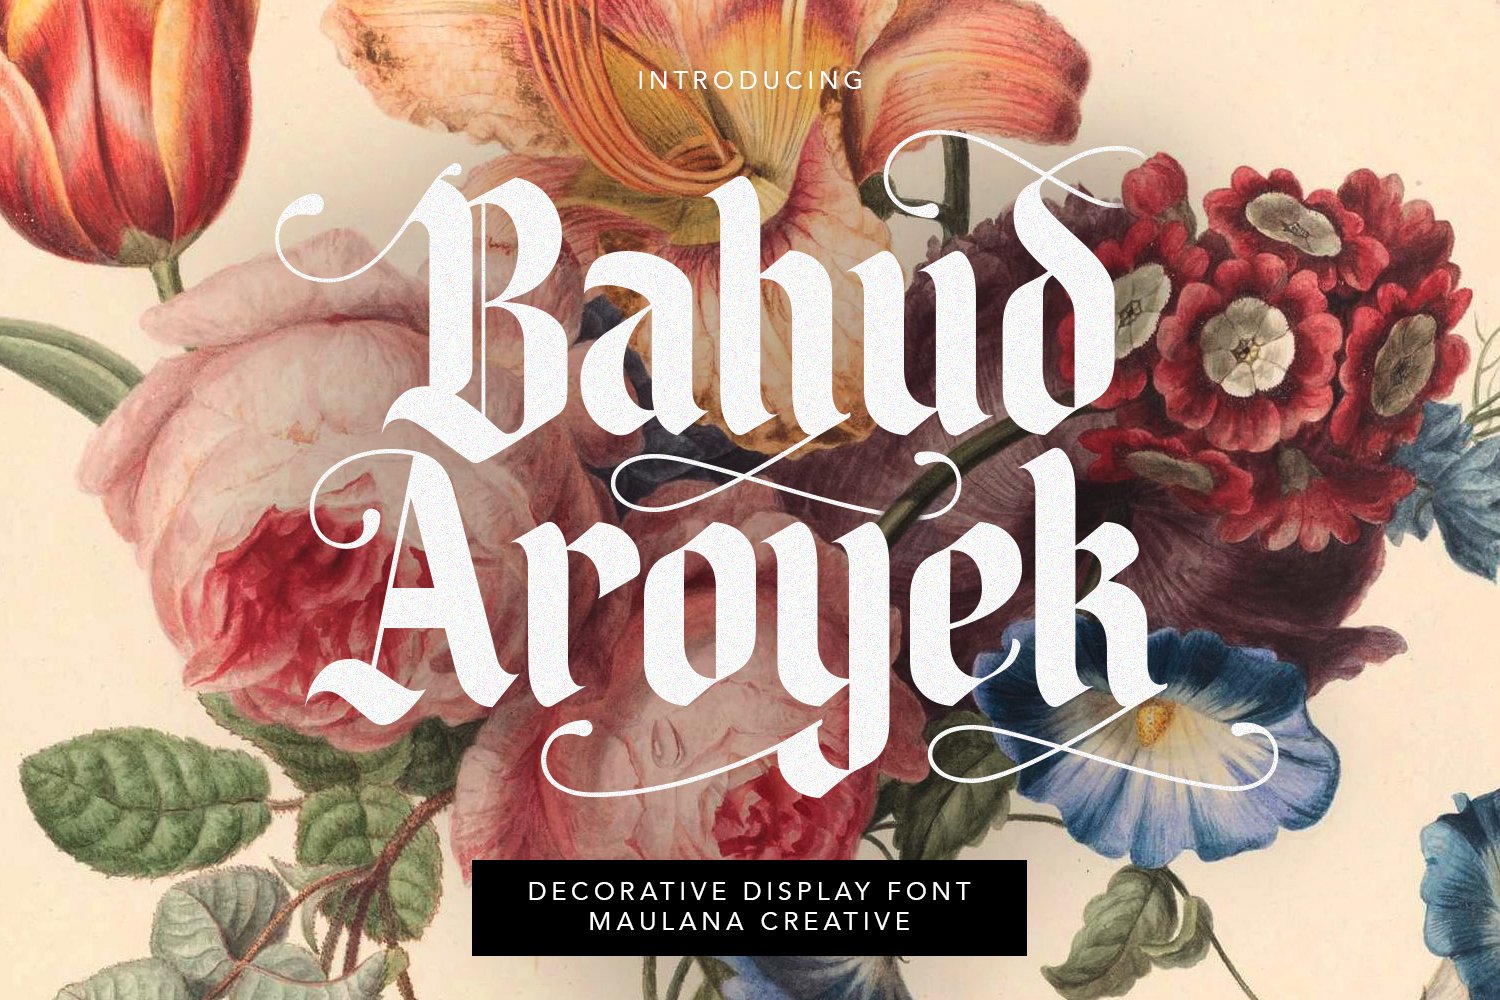 Bahud Aroyek Decorative Display Font cover image.